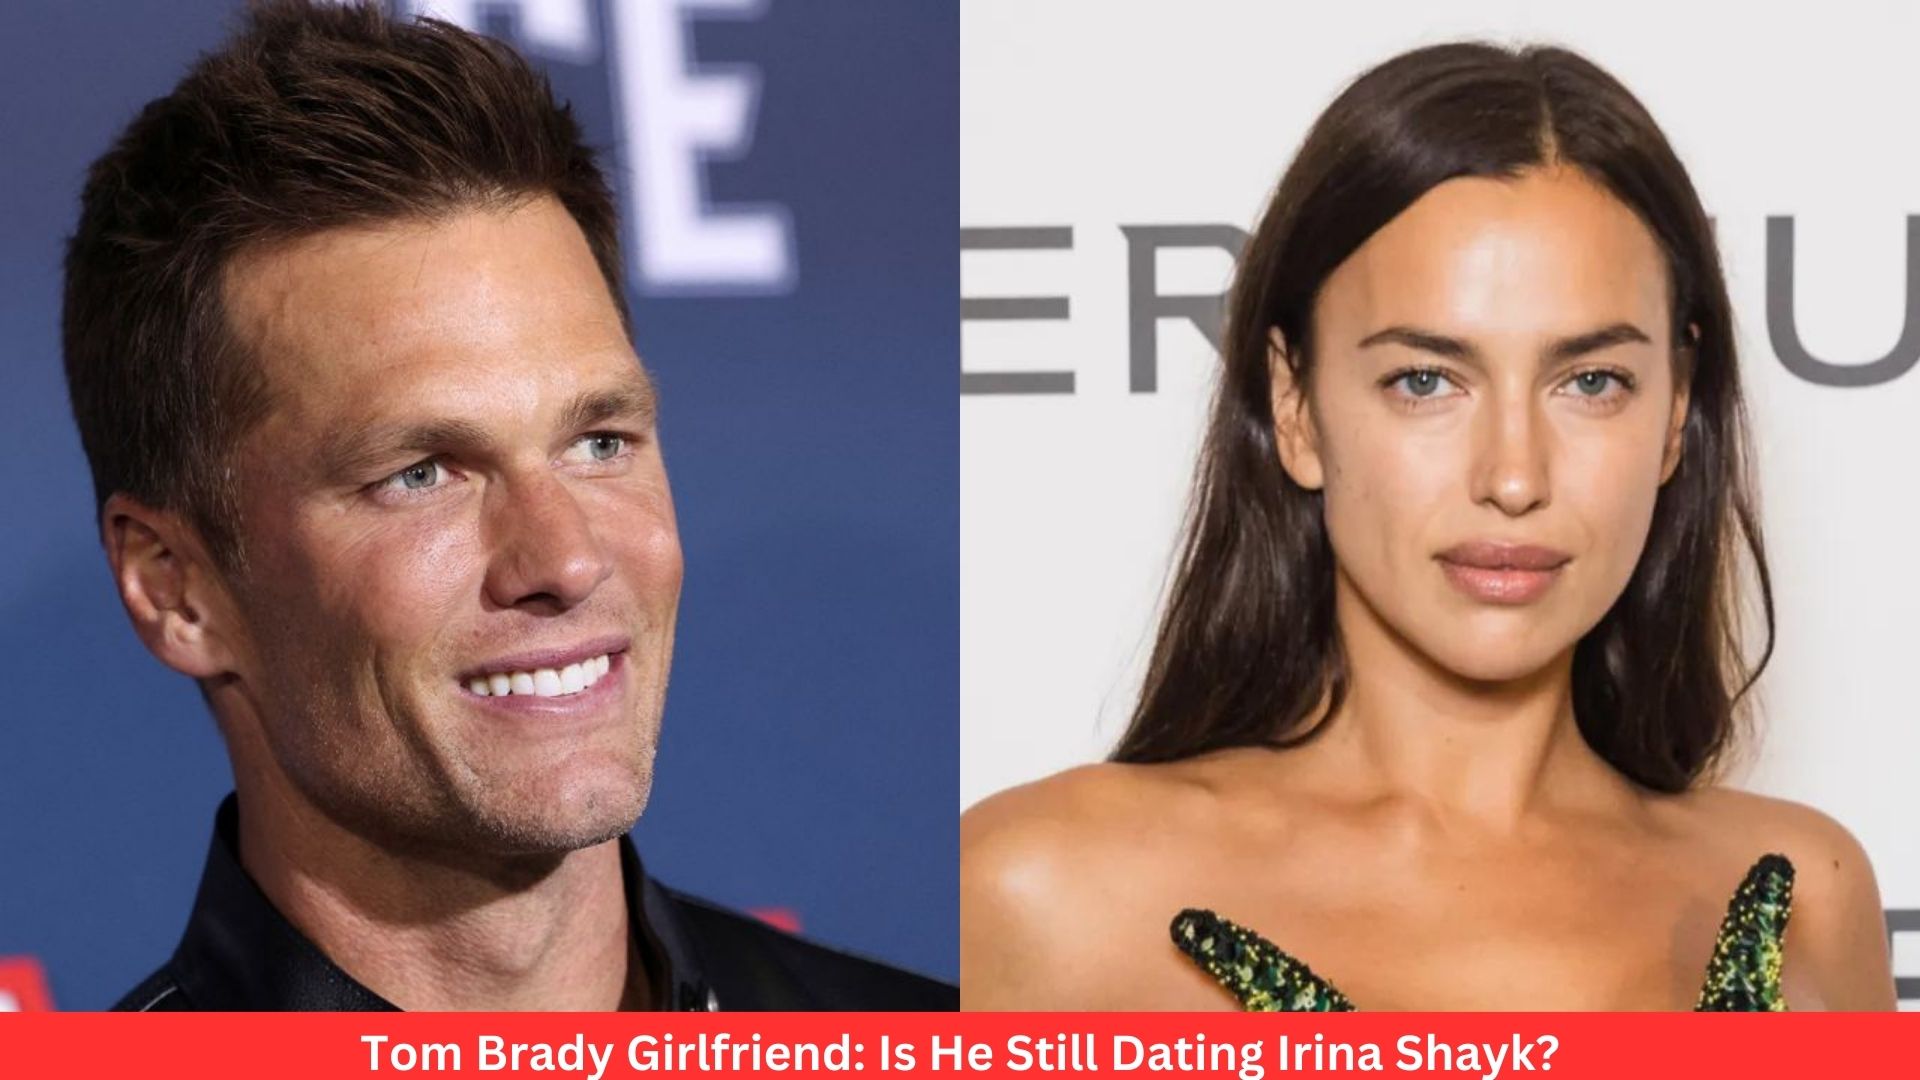 Tom Brady Girlfriend: Is He Still Dating Irina Shayk?